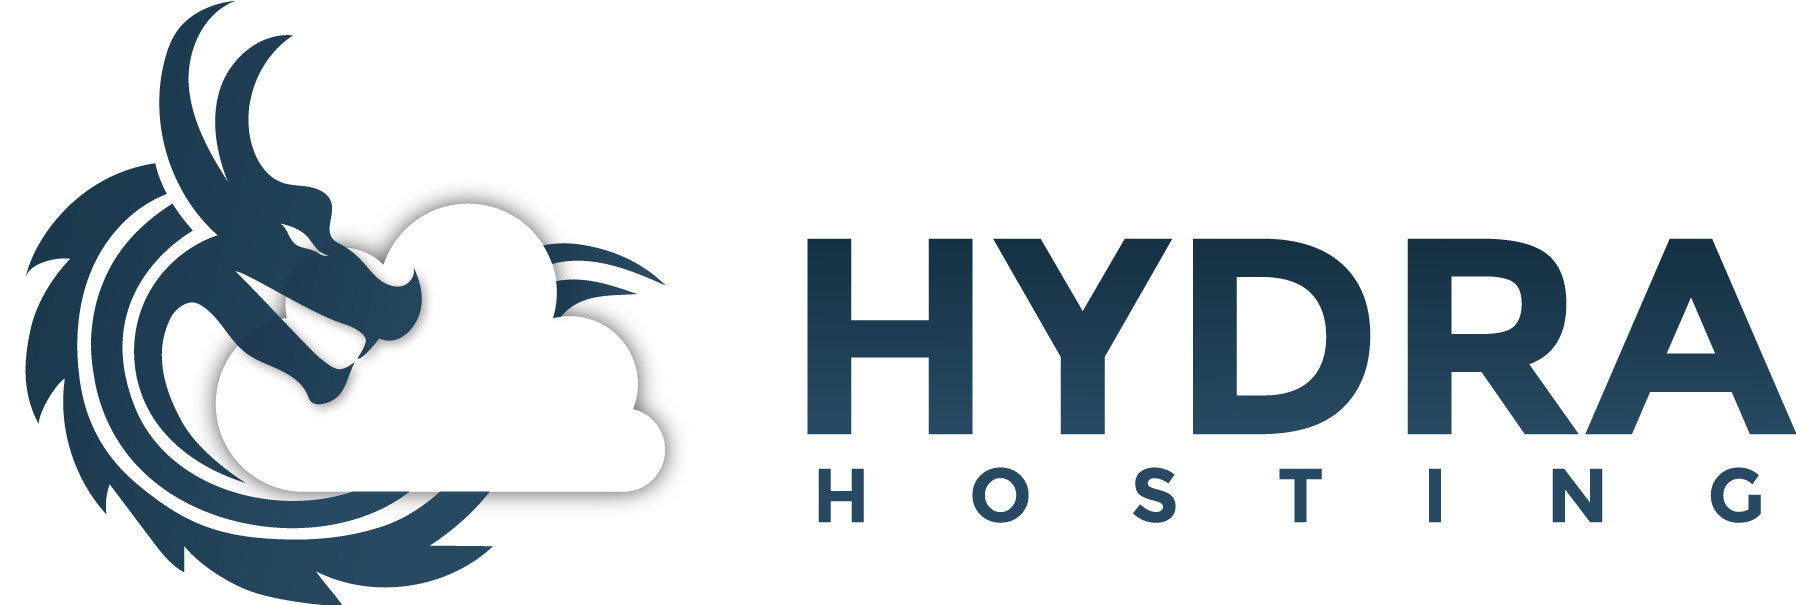 Hydra-Hosting